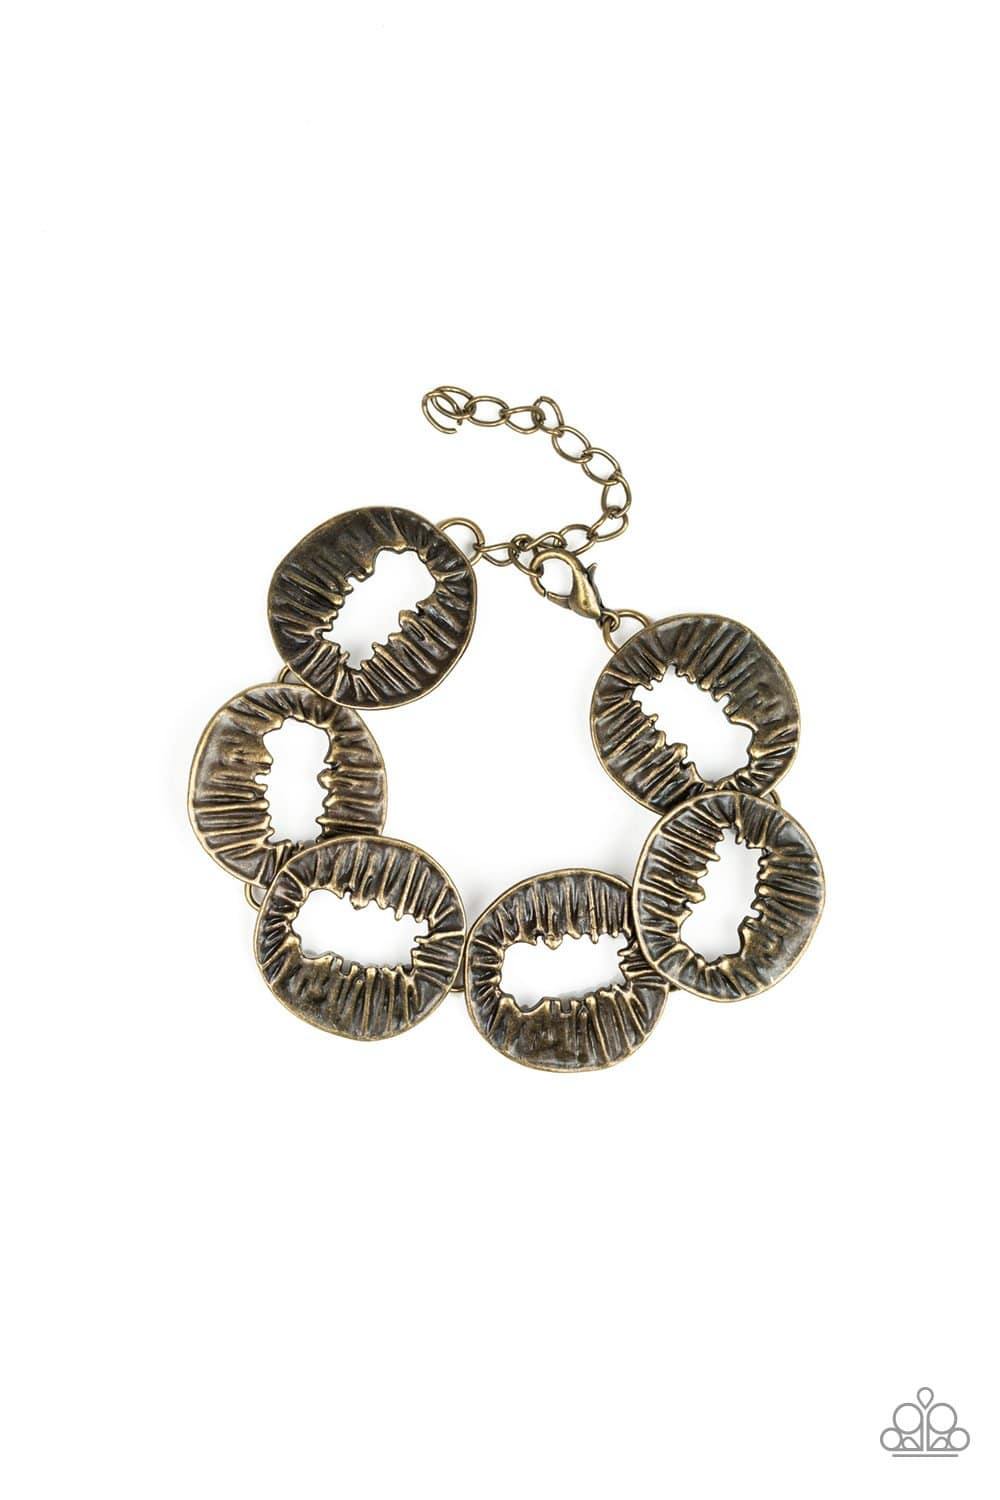 Cut It Out! - Brass Textured Discs Bracelet - Paparazzi Accessories - GlaMarous Titi Jewels